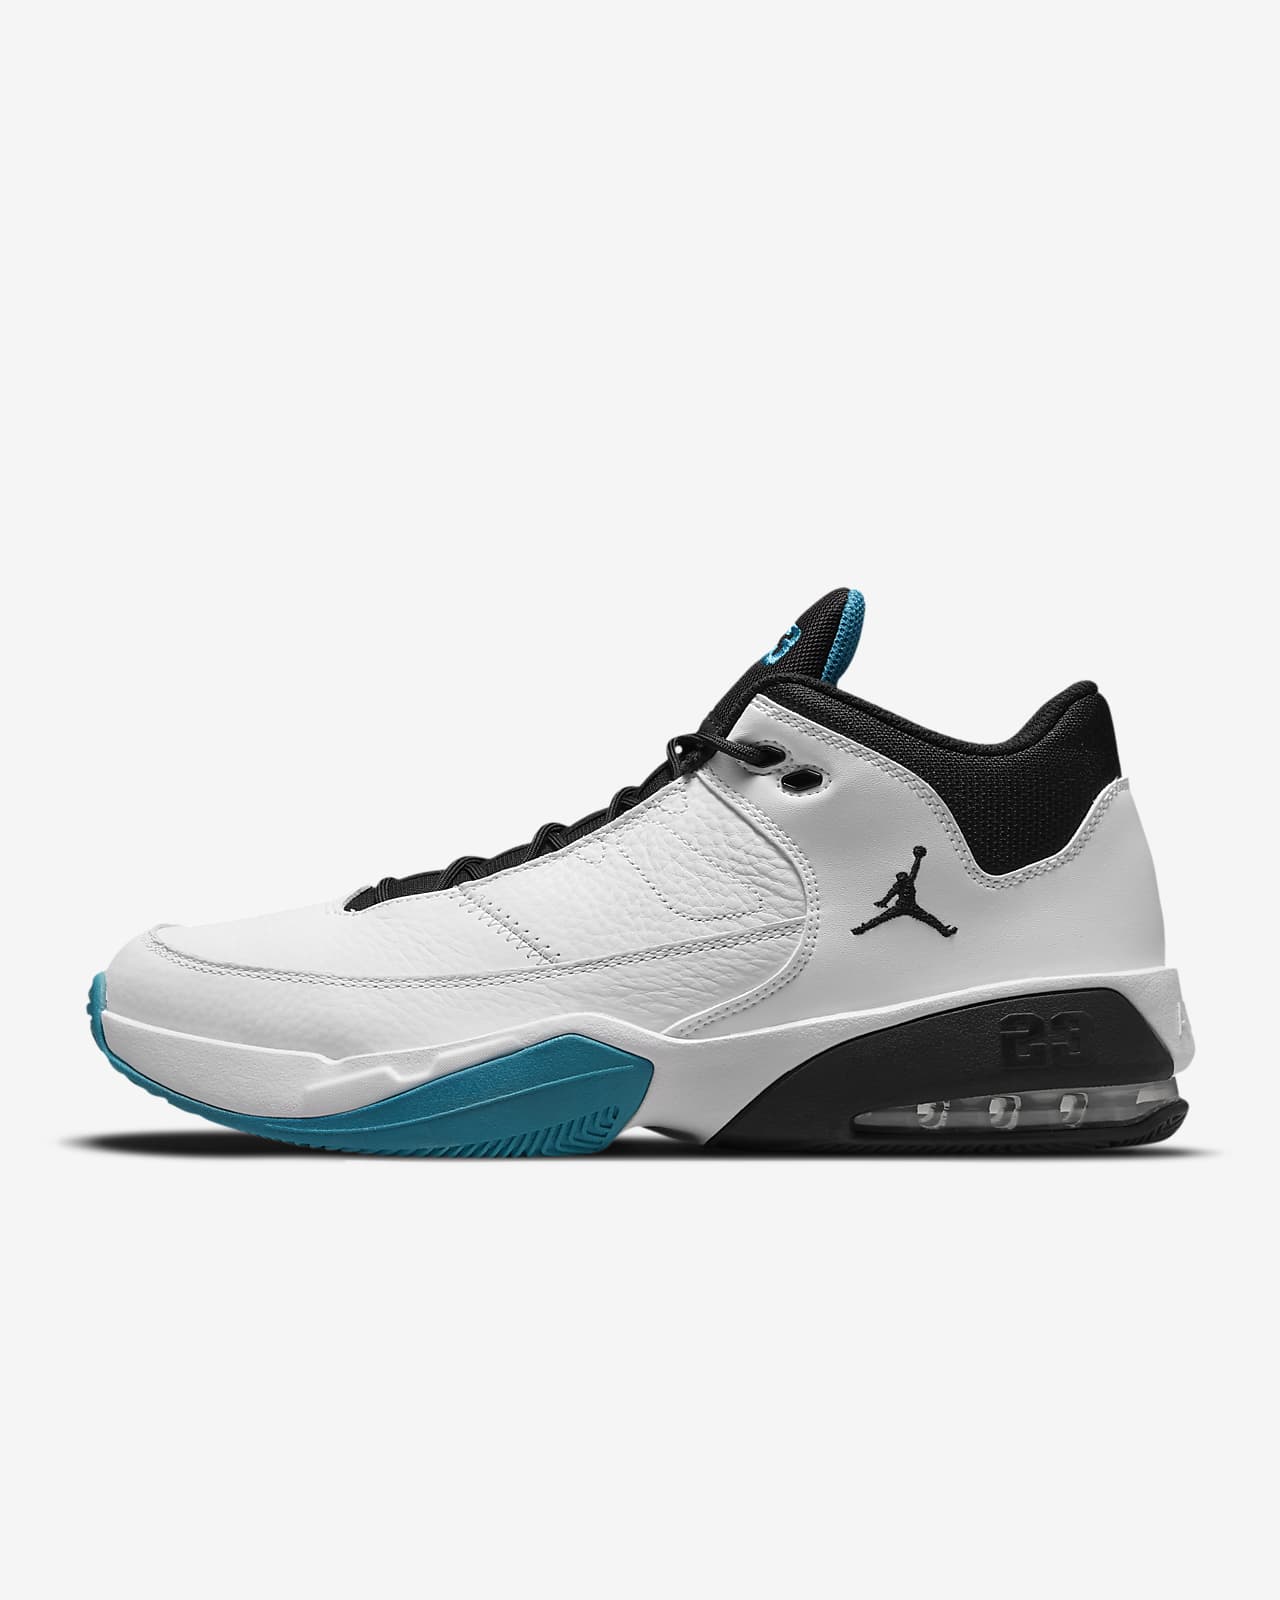 Are Jordan Max Aura 3 Basketball Shoes?